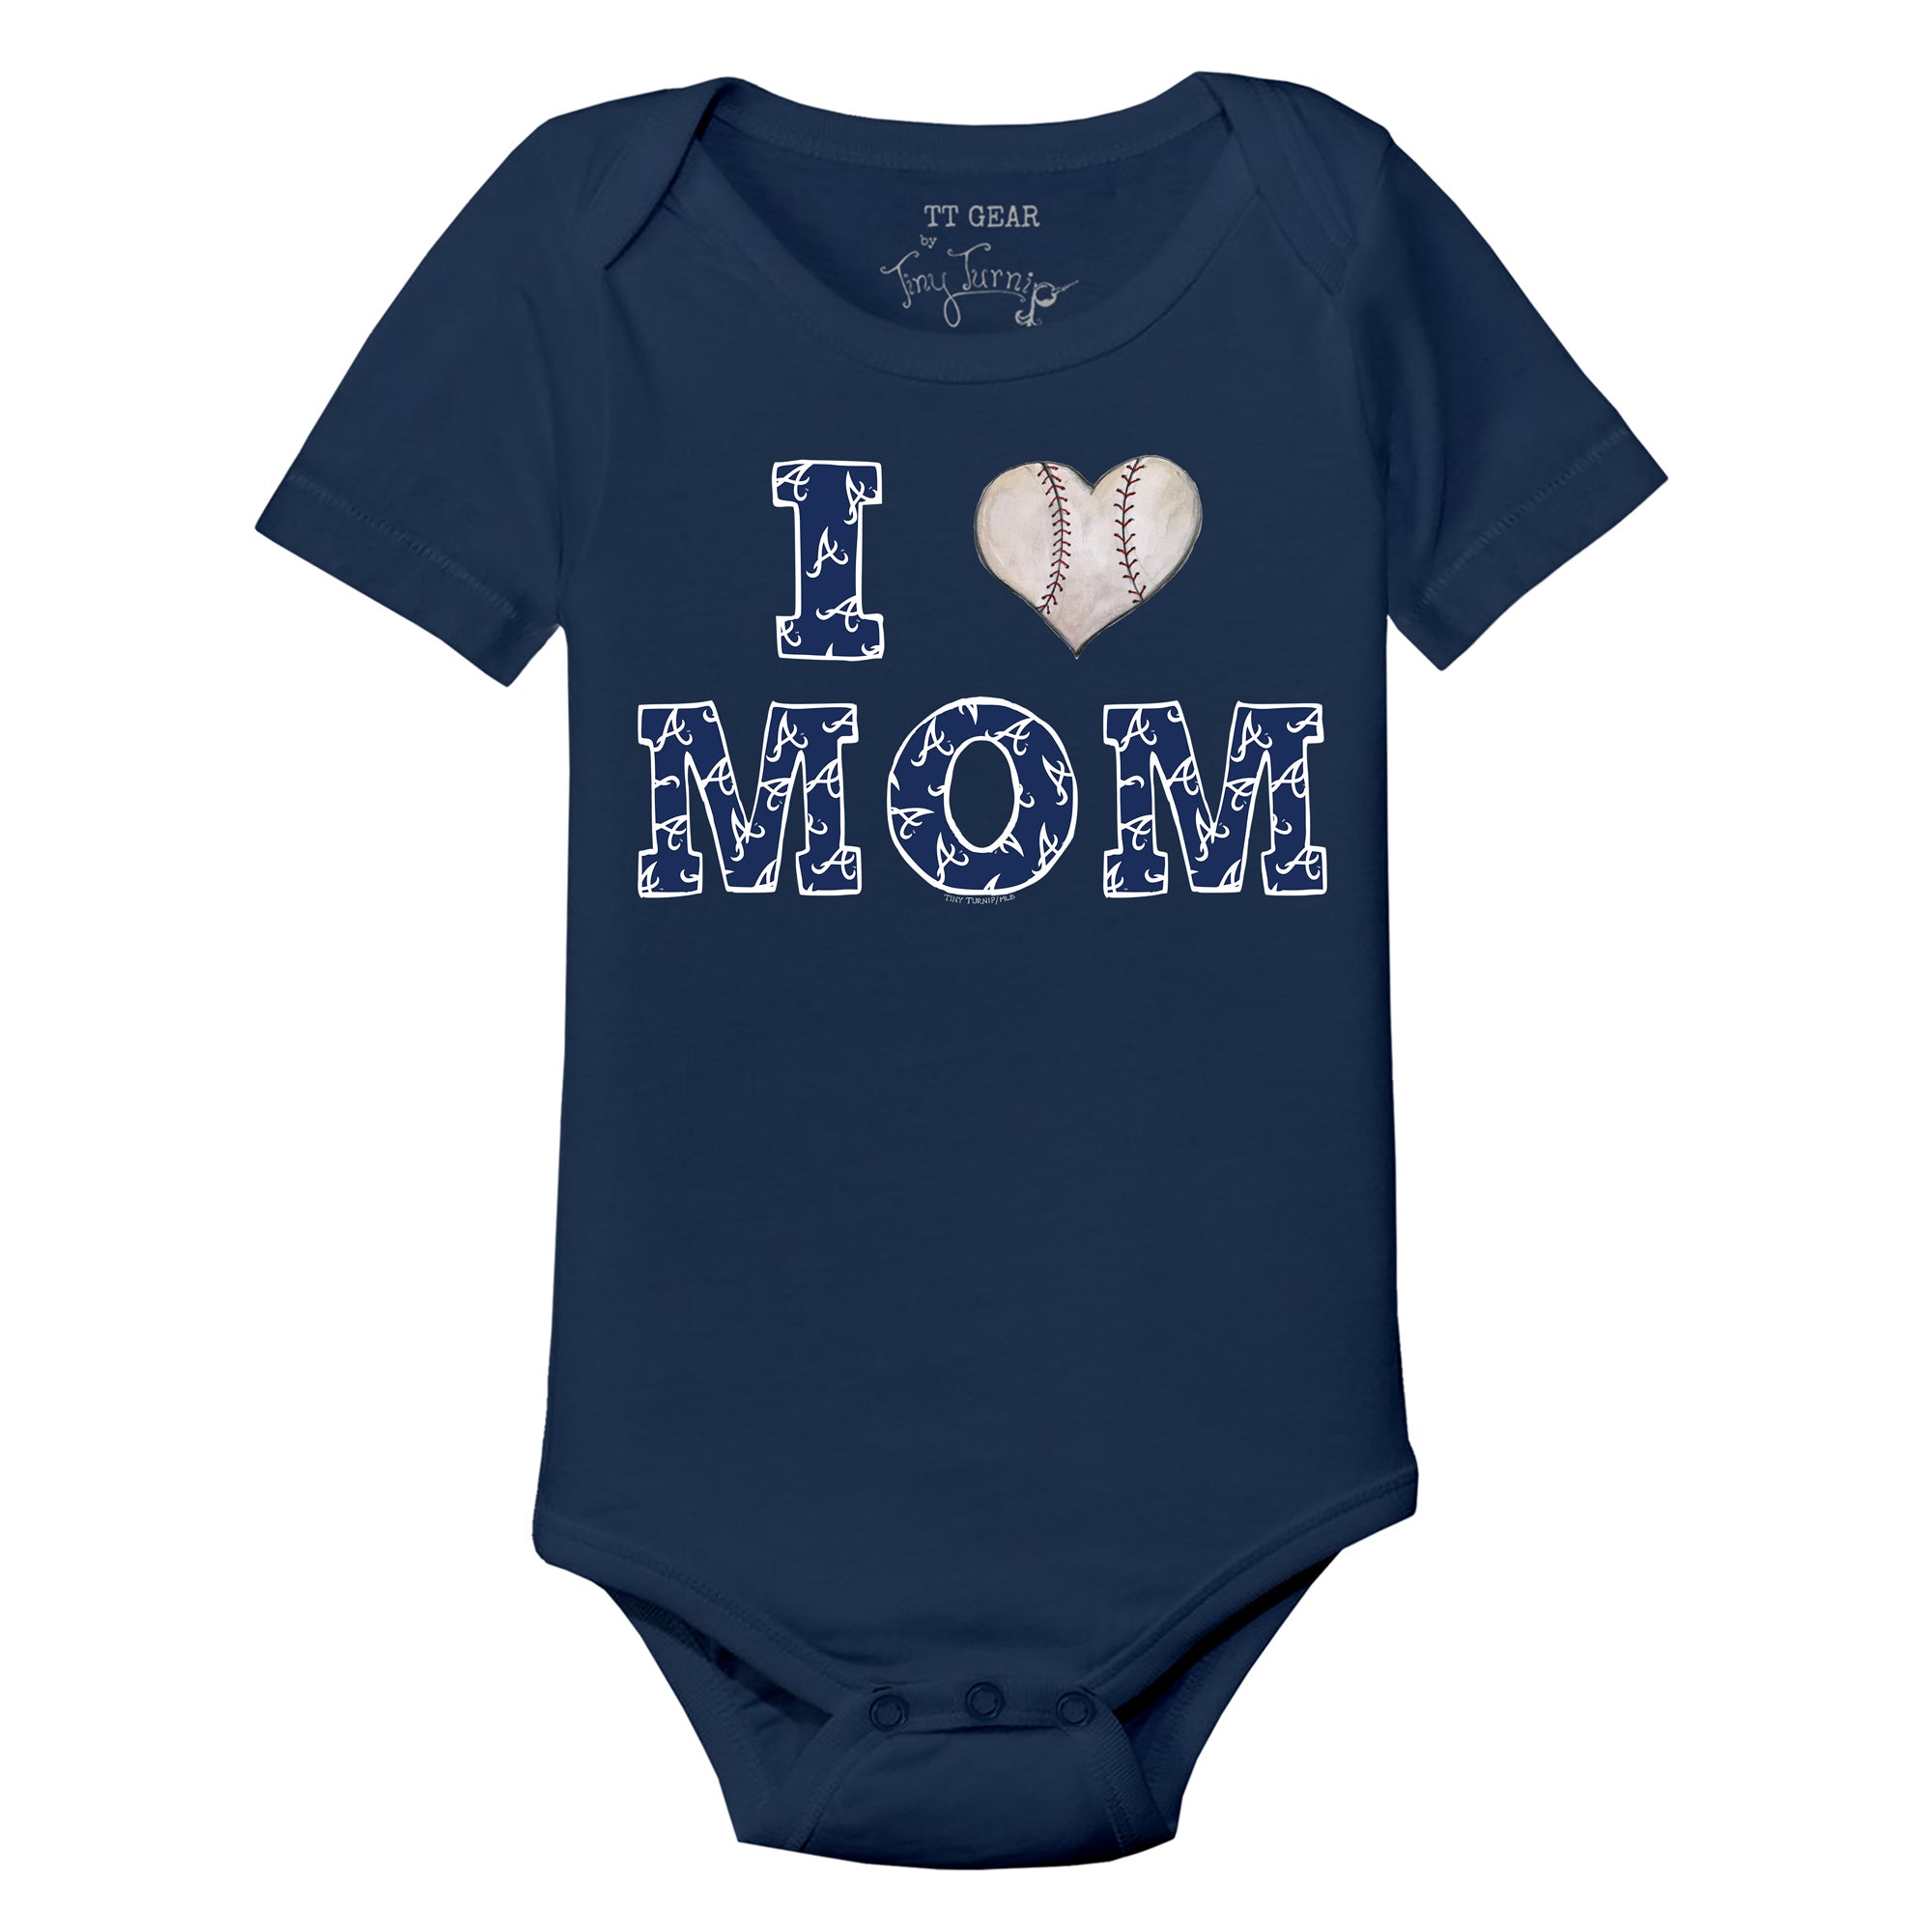 Toronto Blue Jays Tiny Turnip Infant Baseball Love Bodysuit - Royal